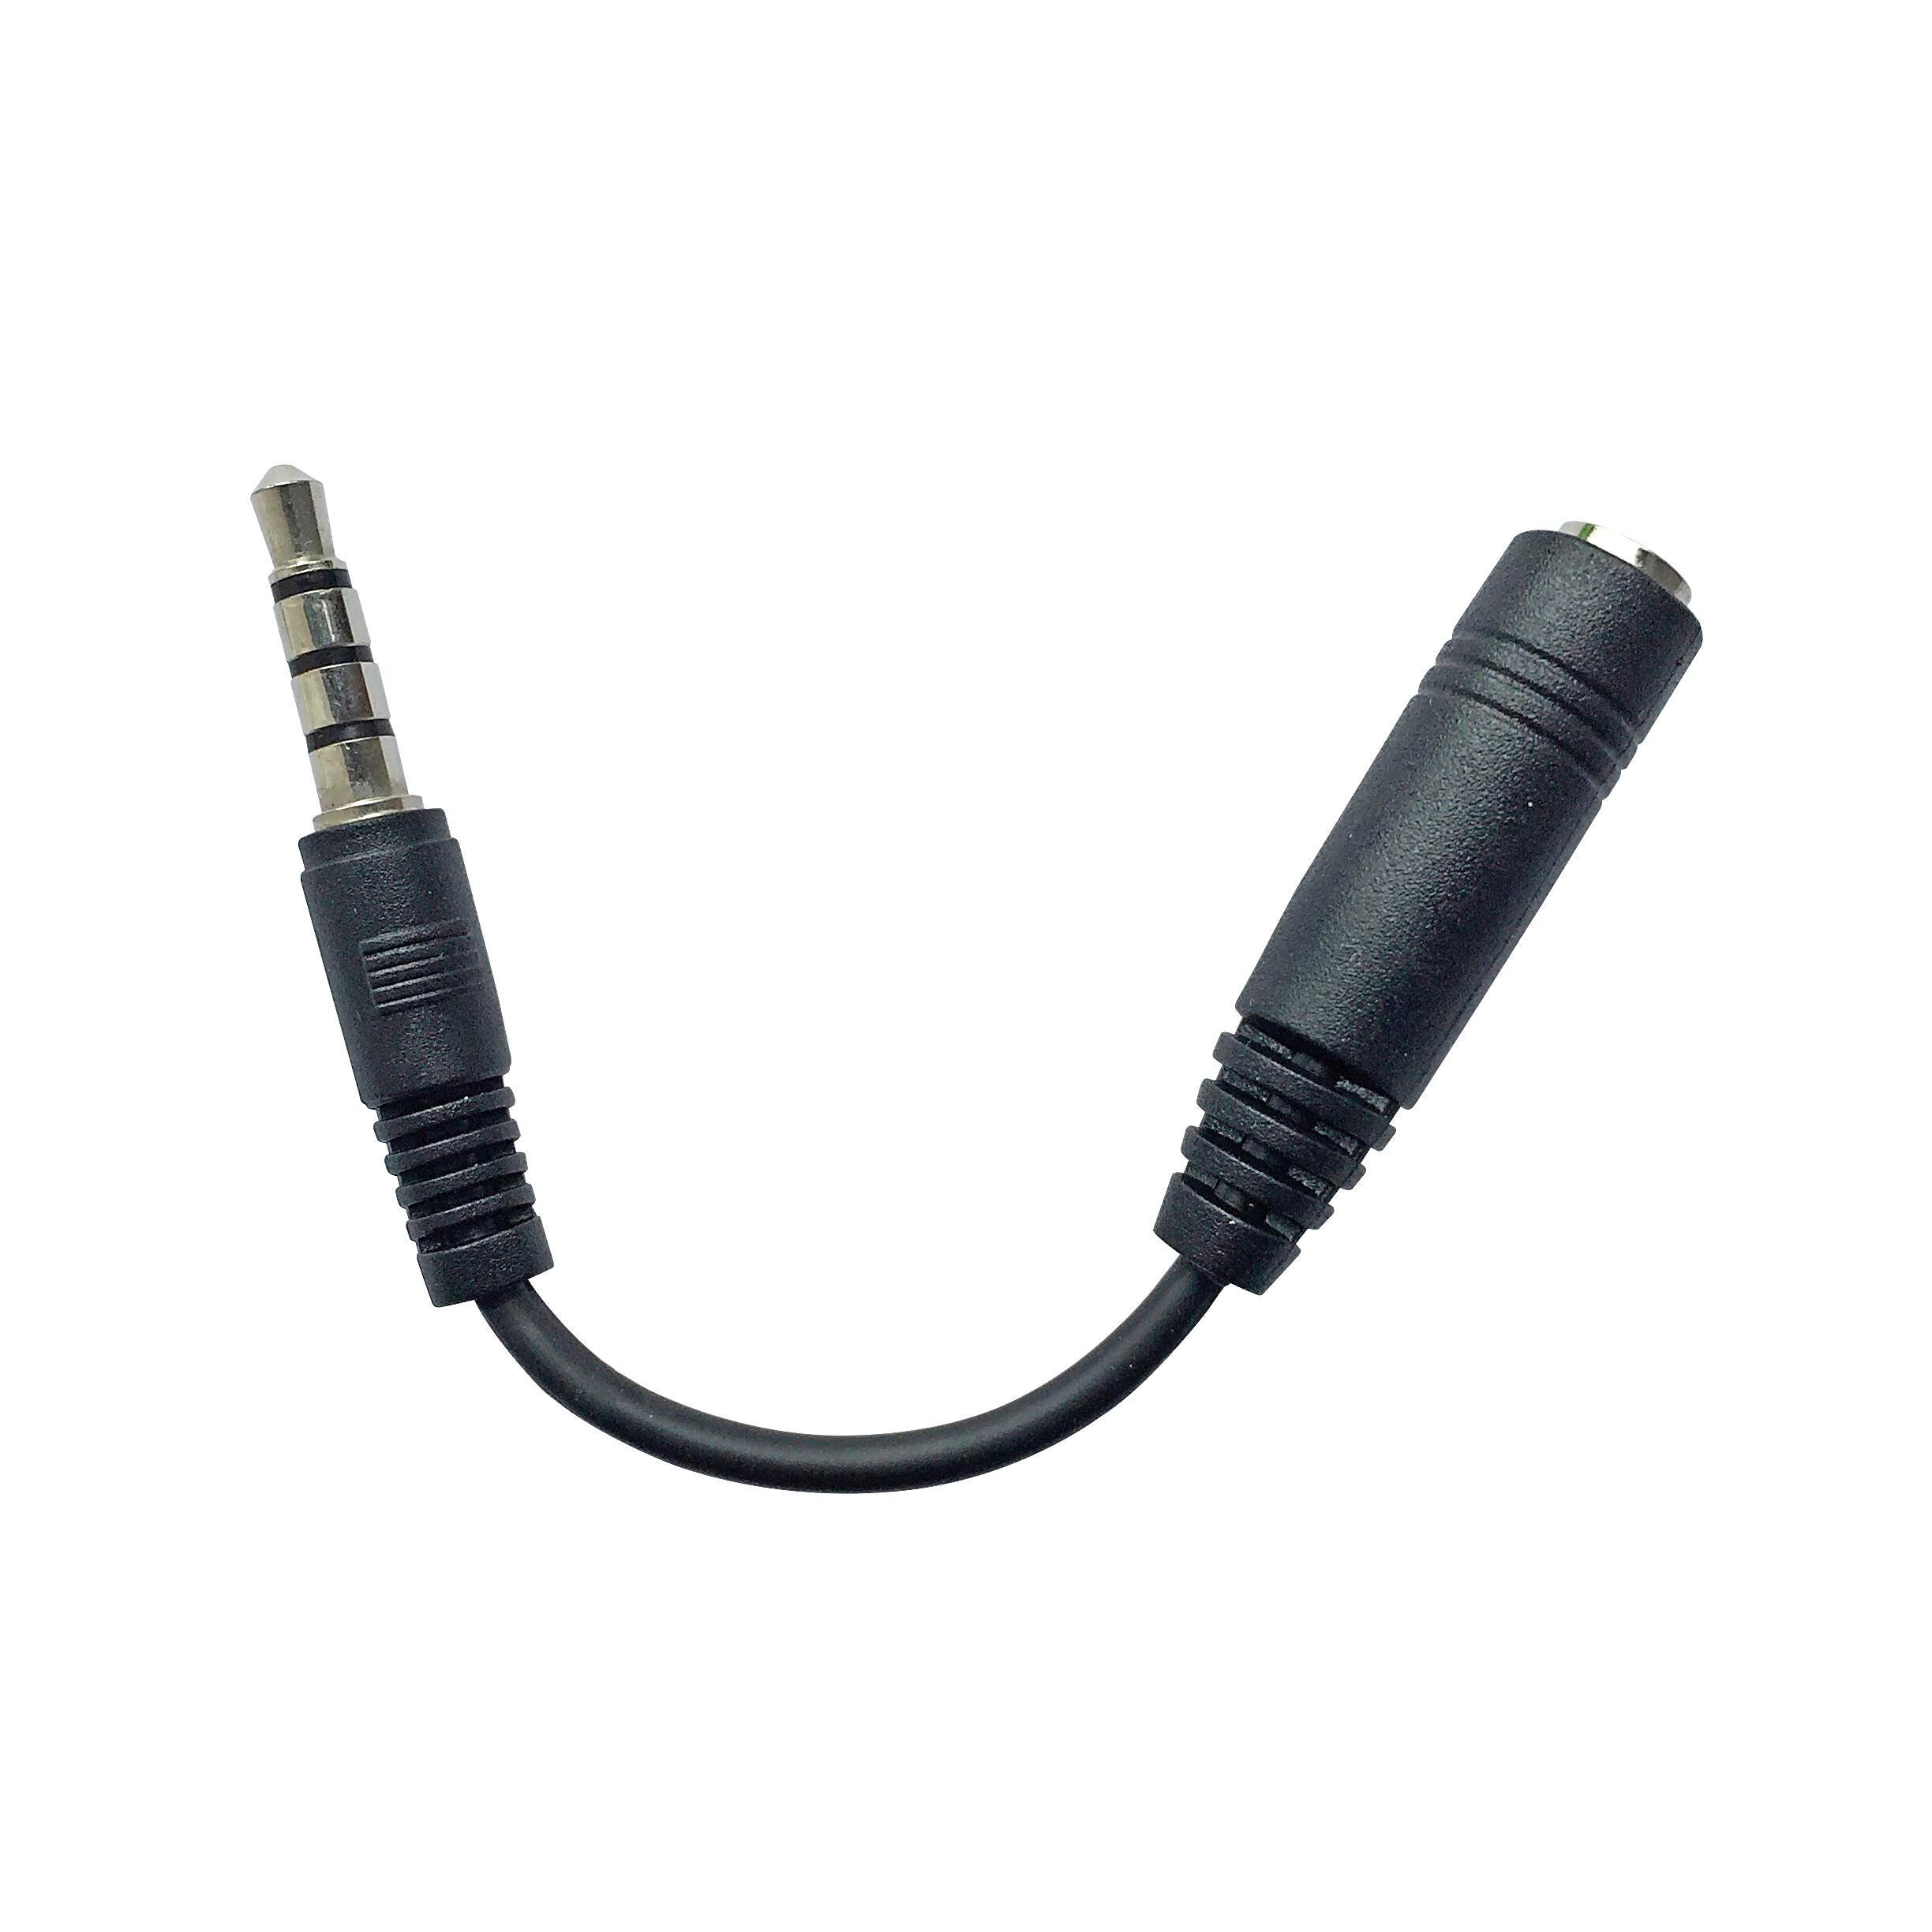 Califone Headset with Gooseneck Microphone, 3.5mm Plug, Black